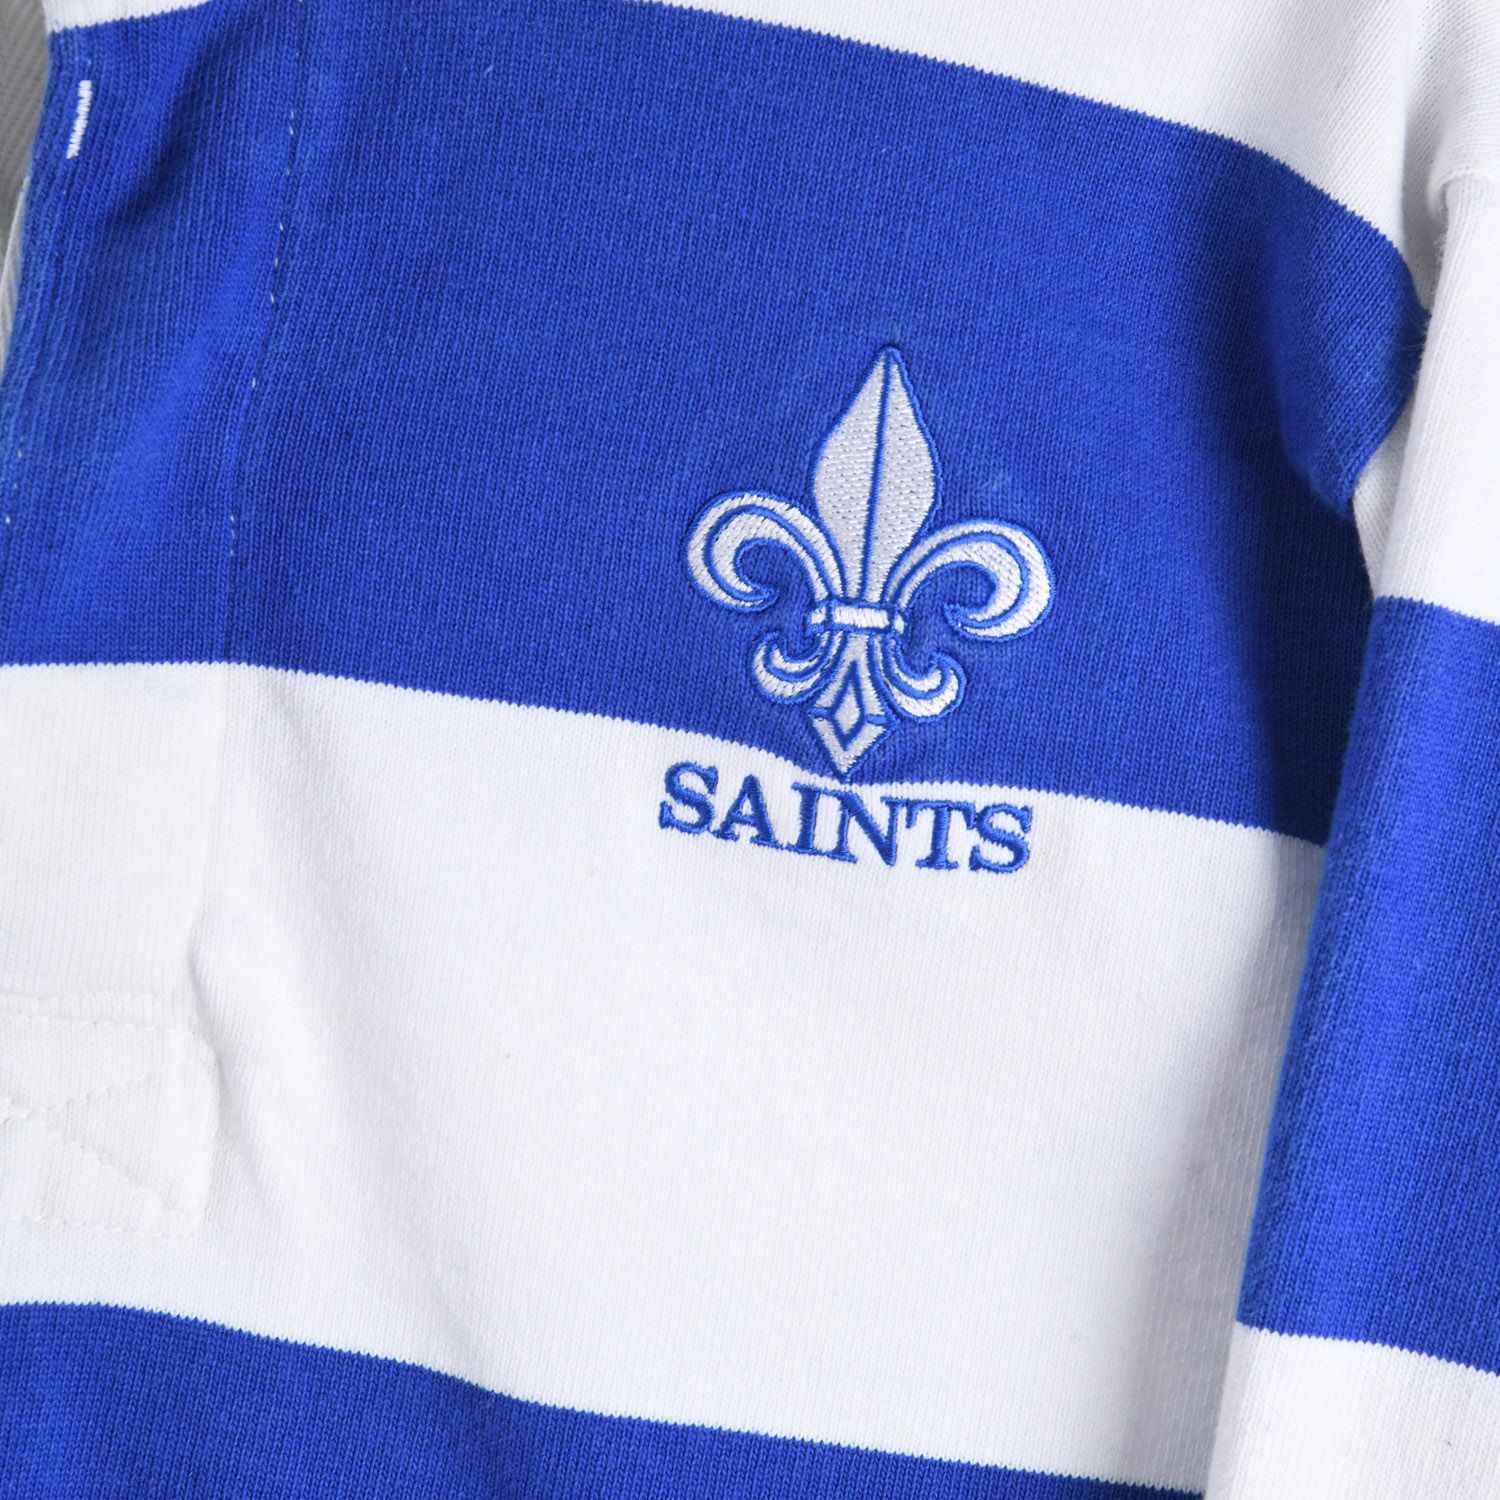 Saints Barbarian Rugby Shirt